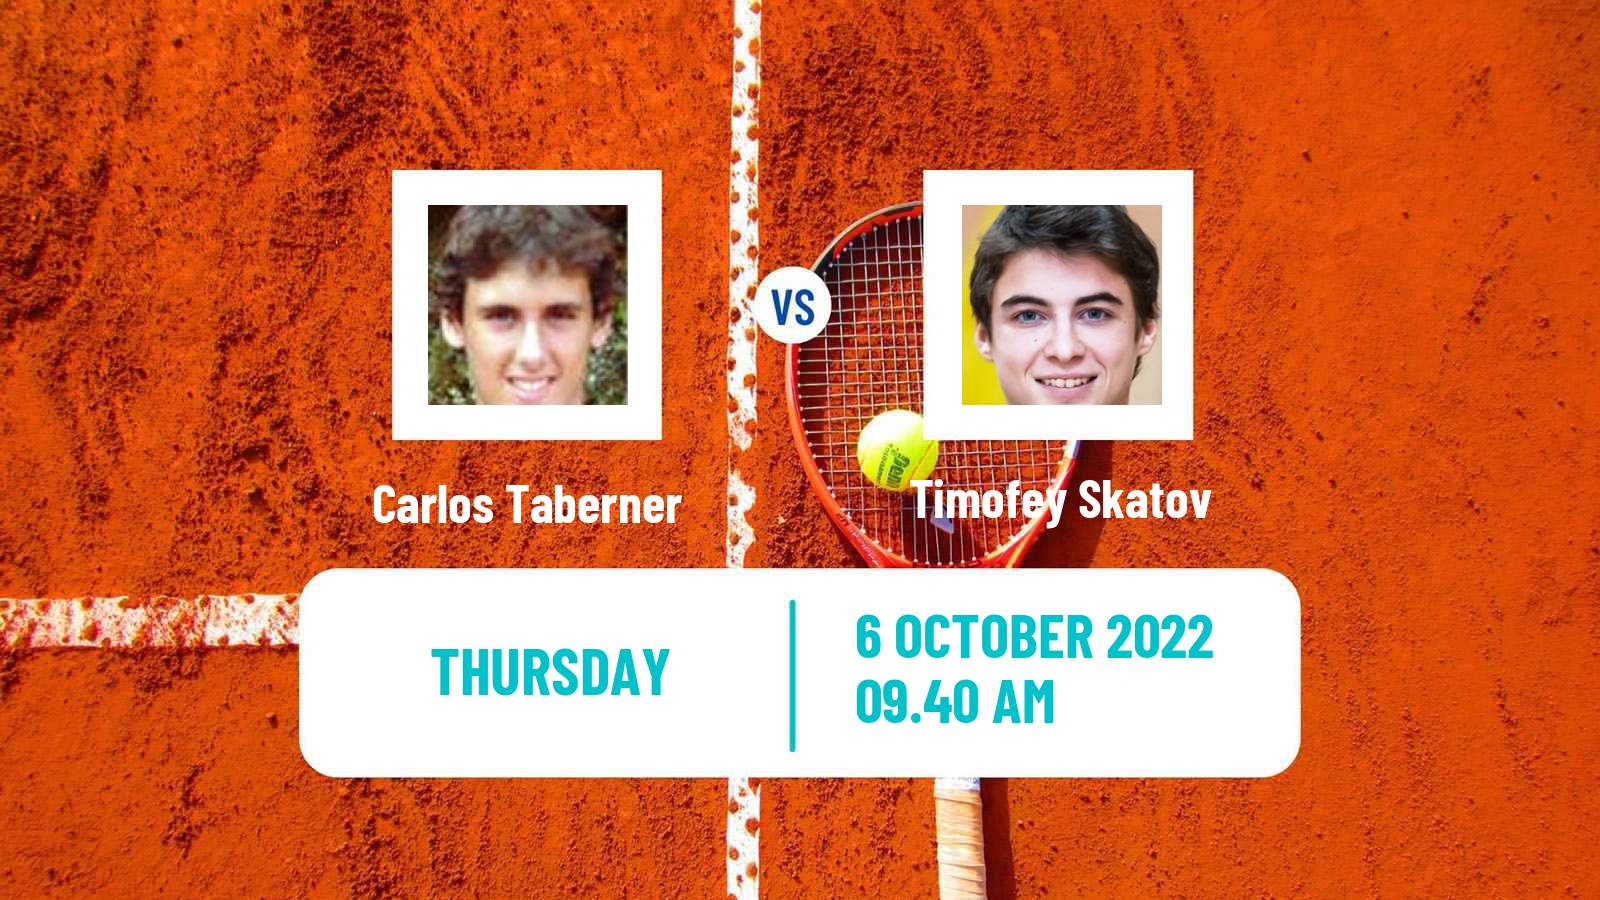 Tennis ATP Challenger Carlos Taberner - Timofey Skatov